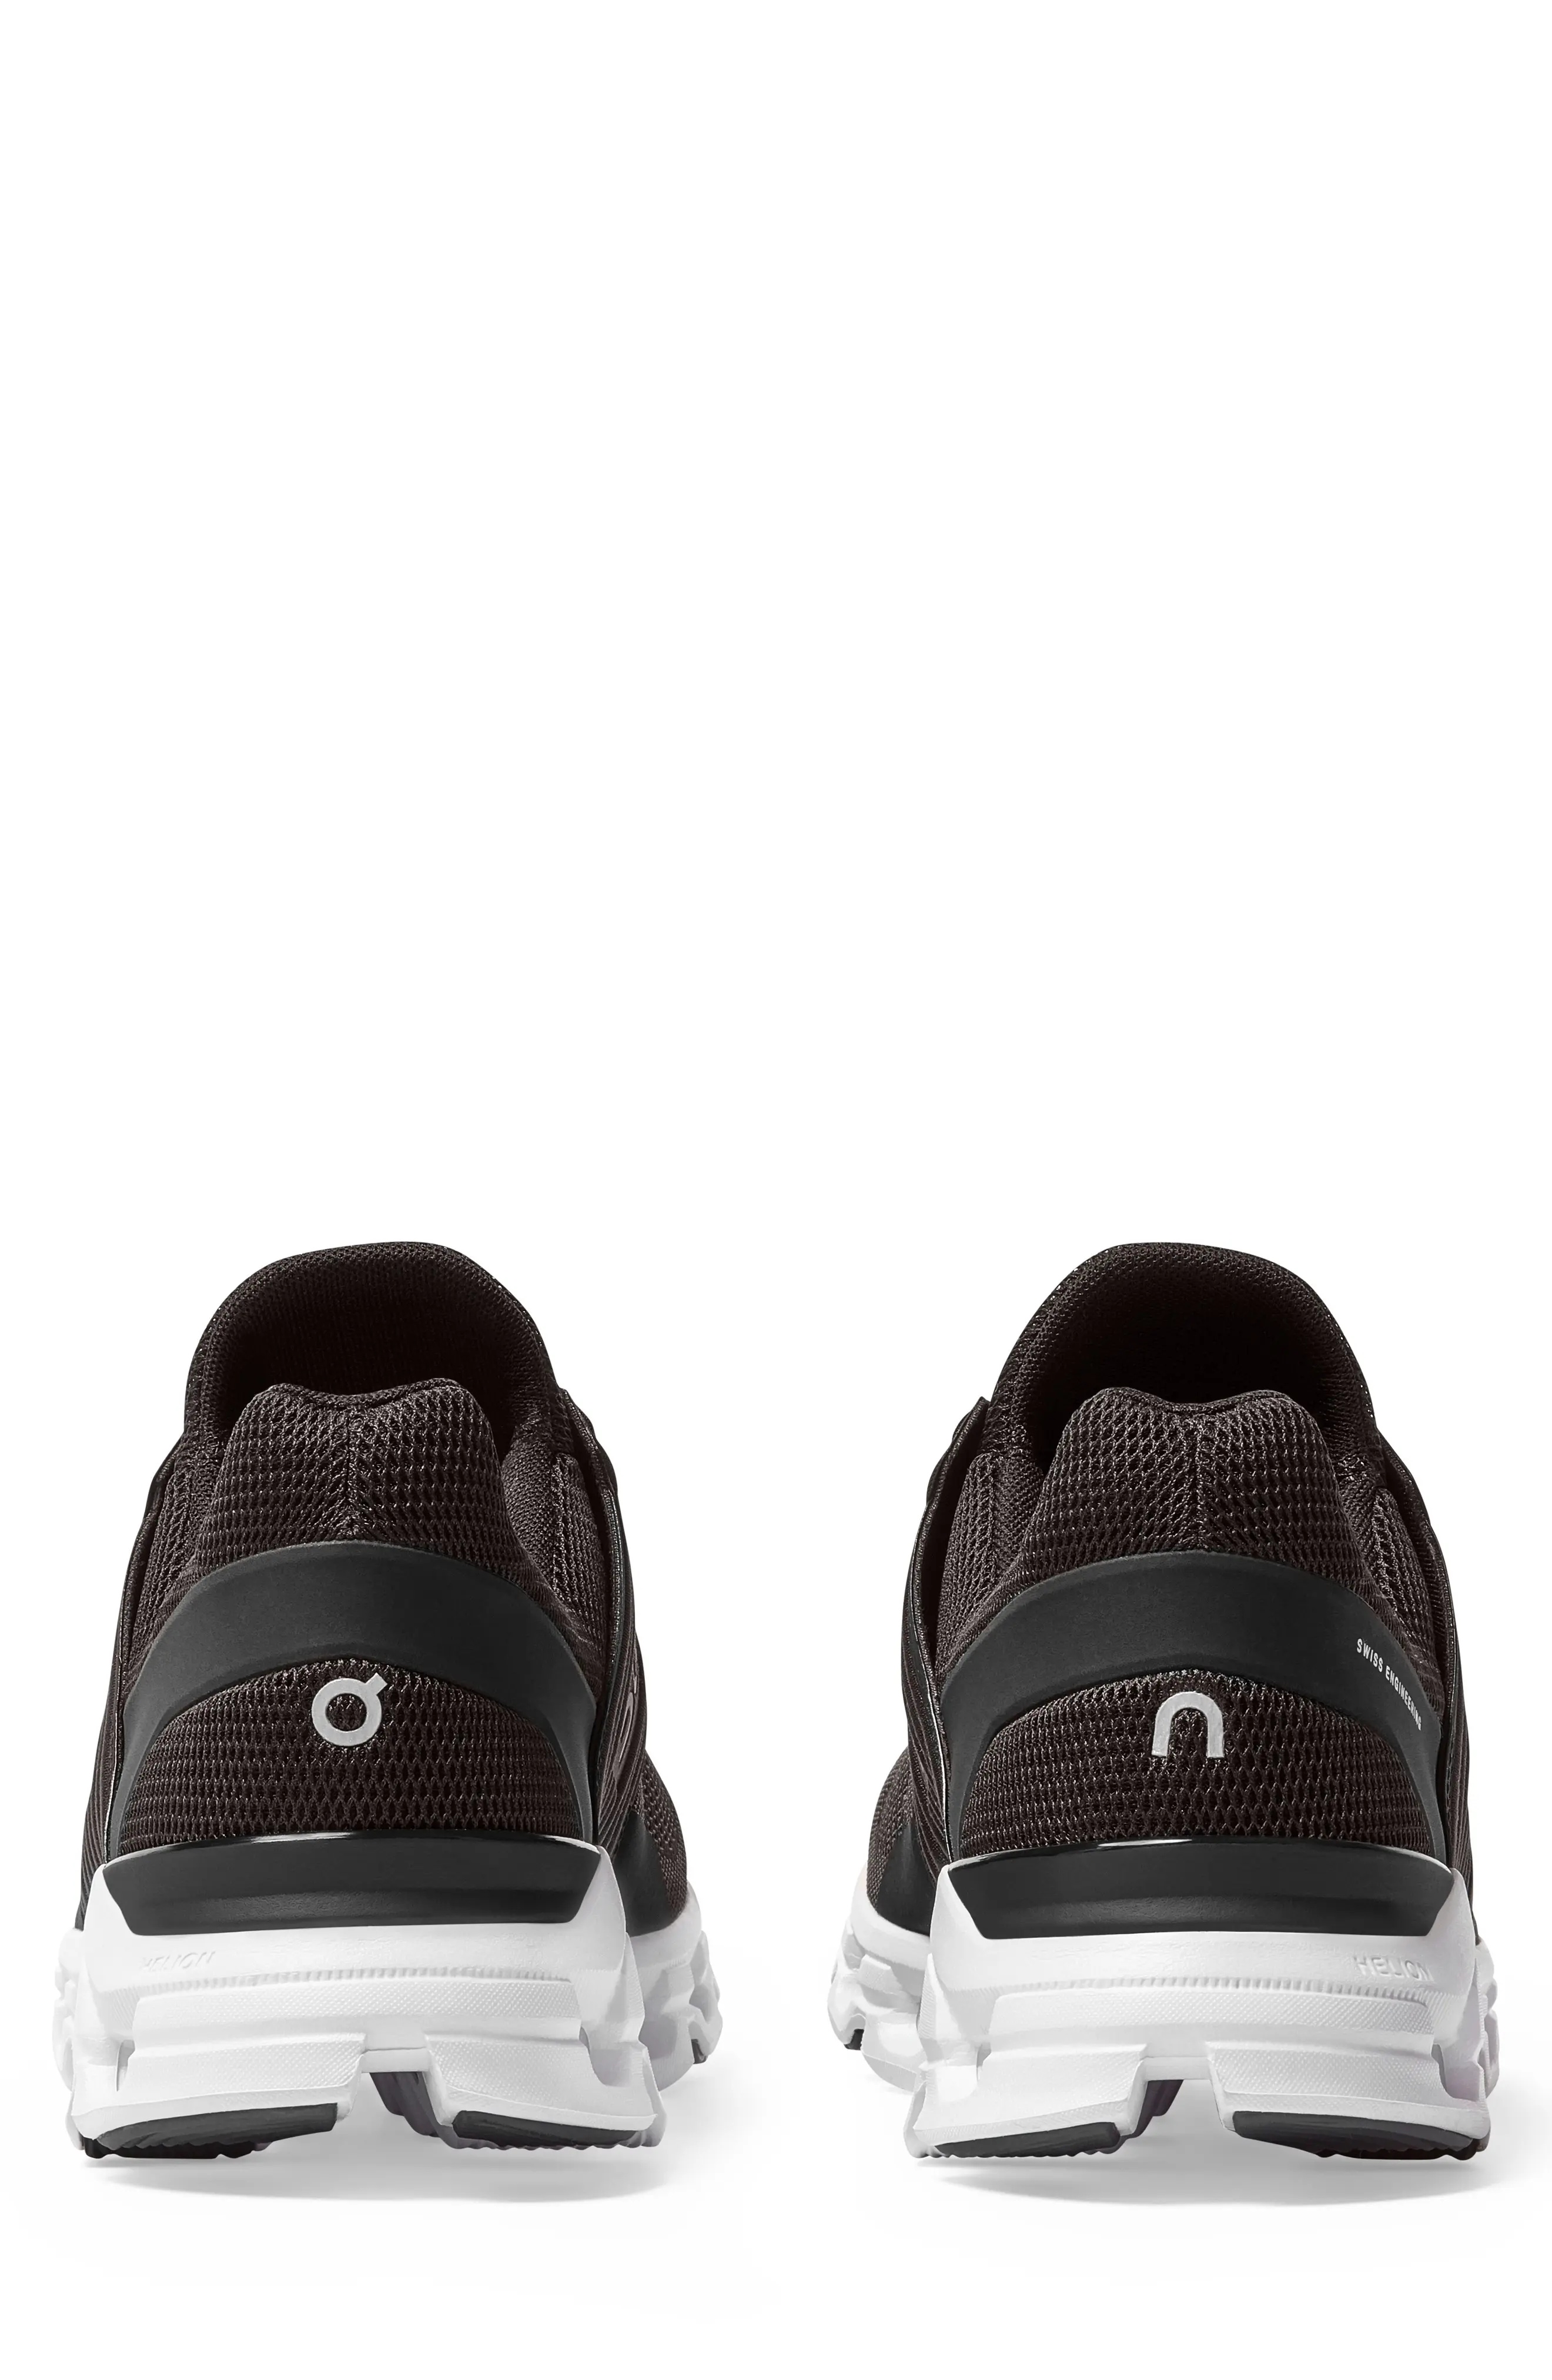 Cloudswift Running Shoe in Black/Grey - 5